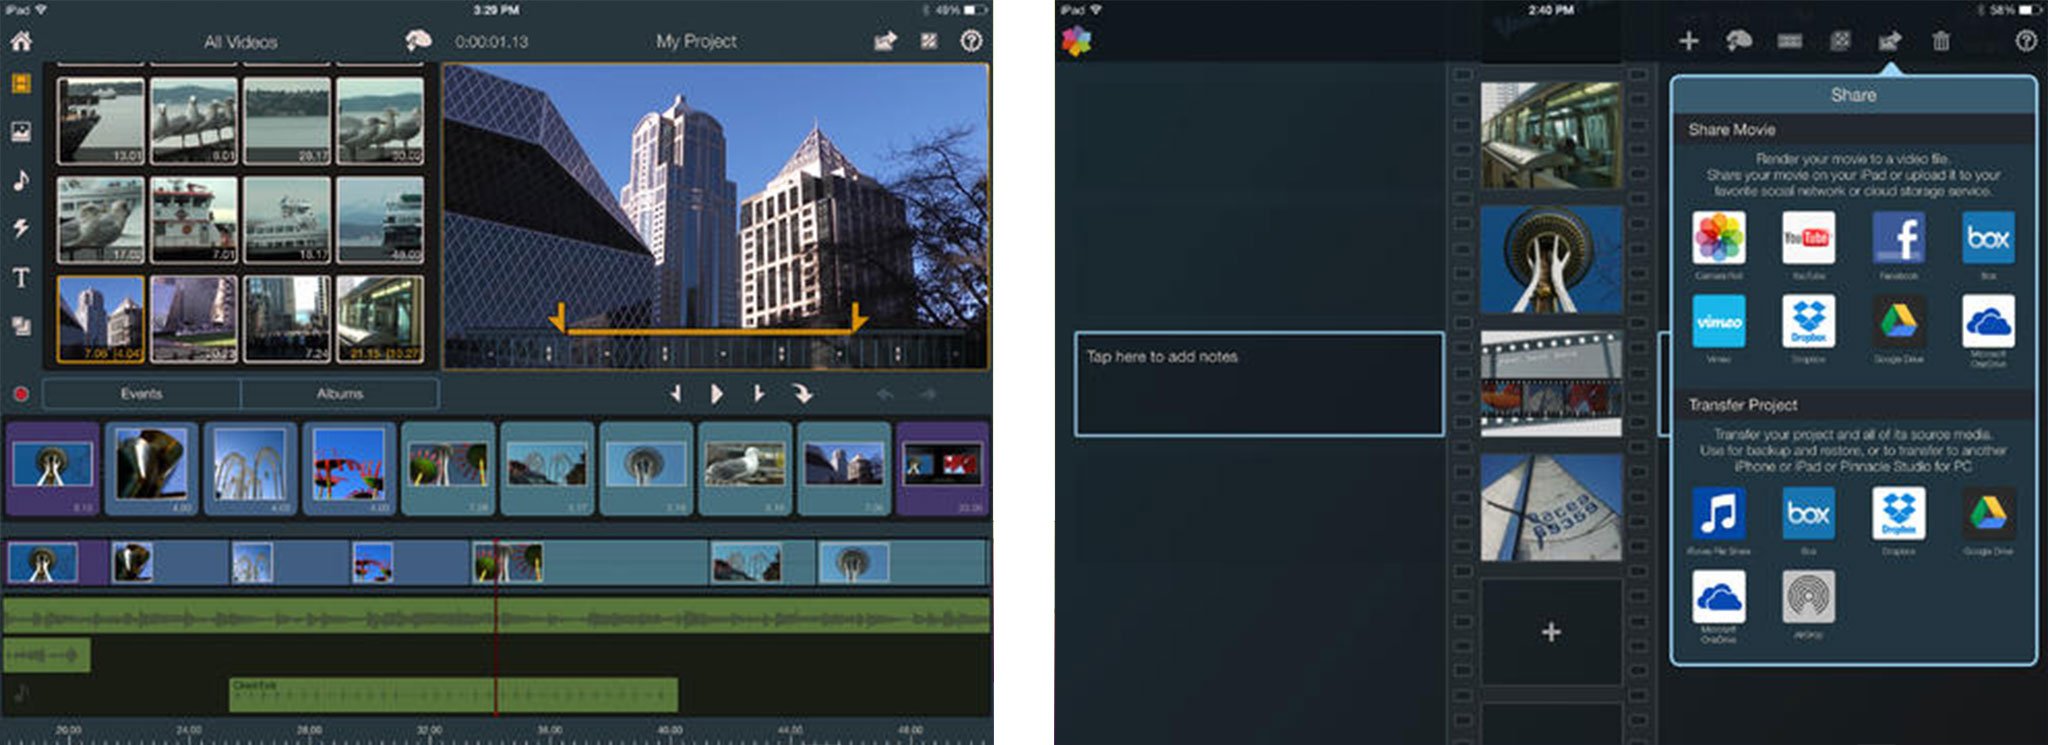 Best video editing apps for iPad: Pinnacle Studio